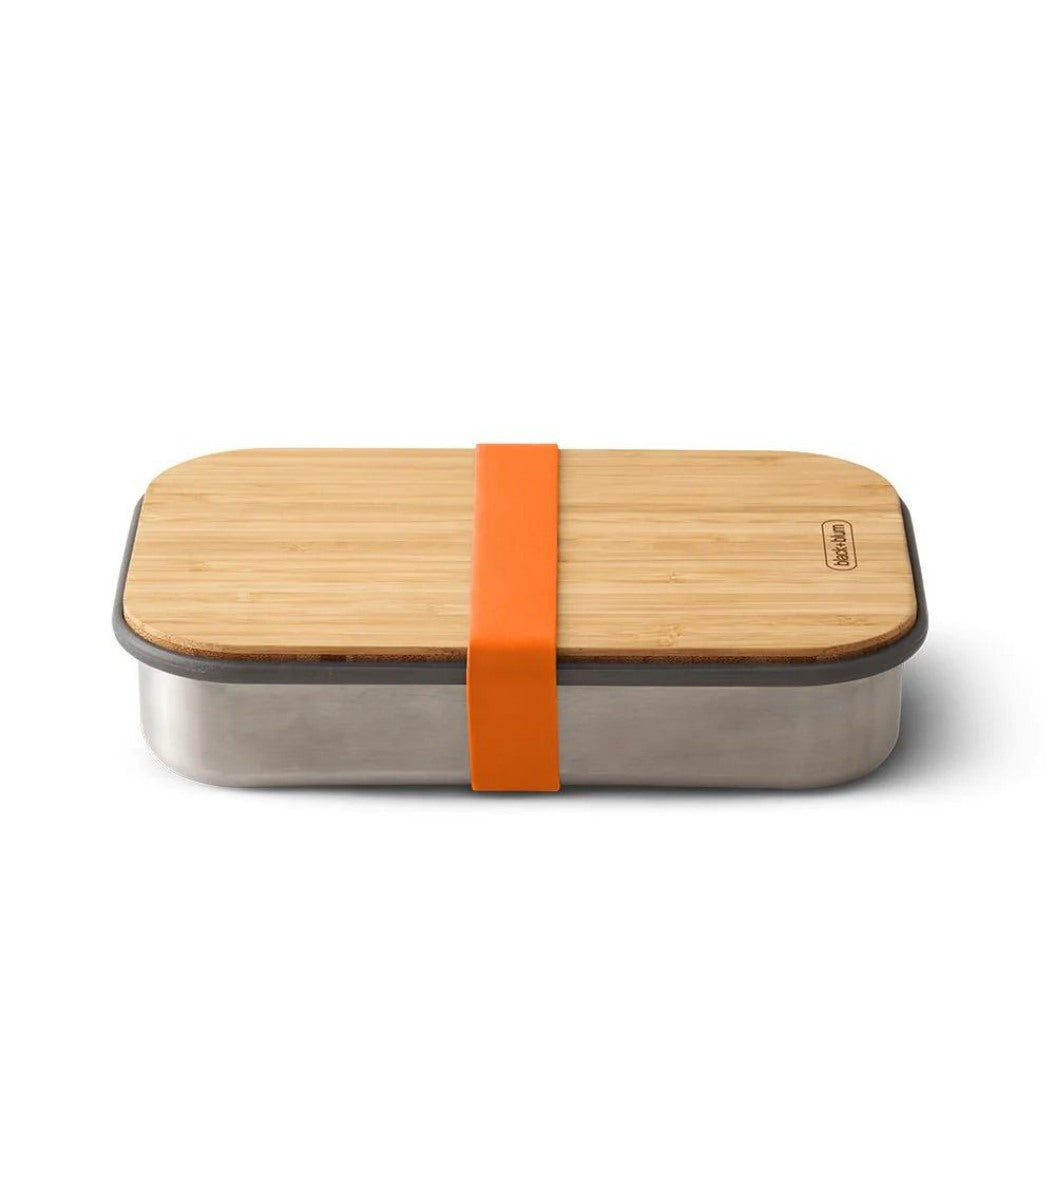 Se Black + Blum - Sandwichboks i rustfri stål (Orange) hos RejseGear.dk